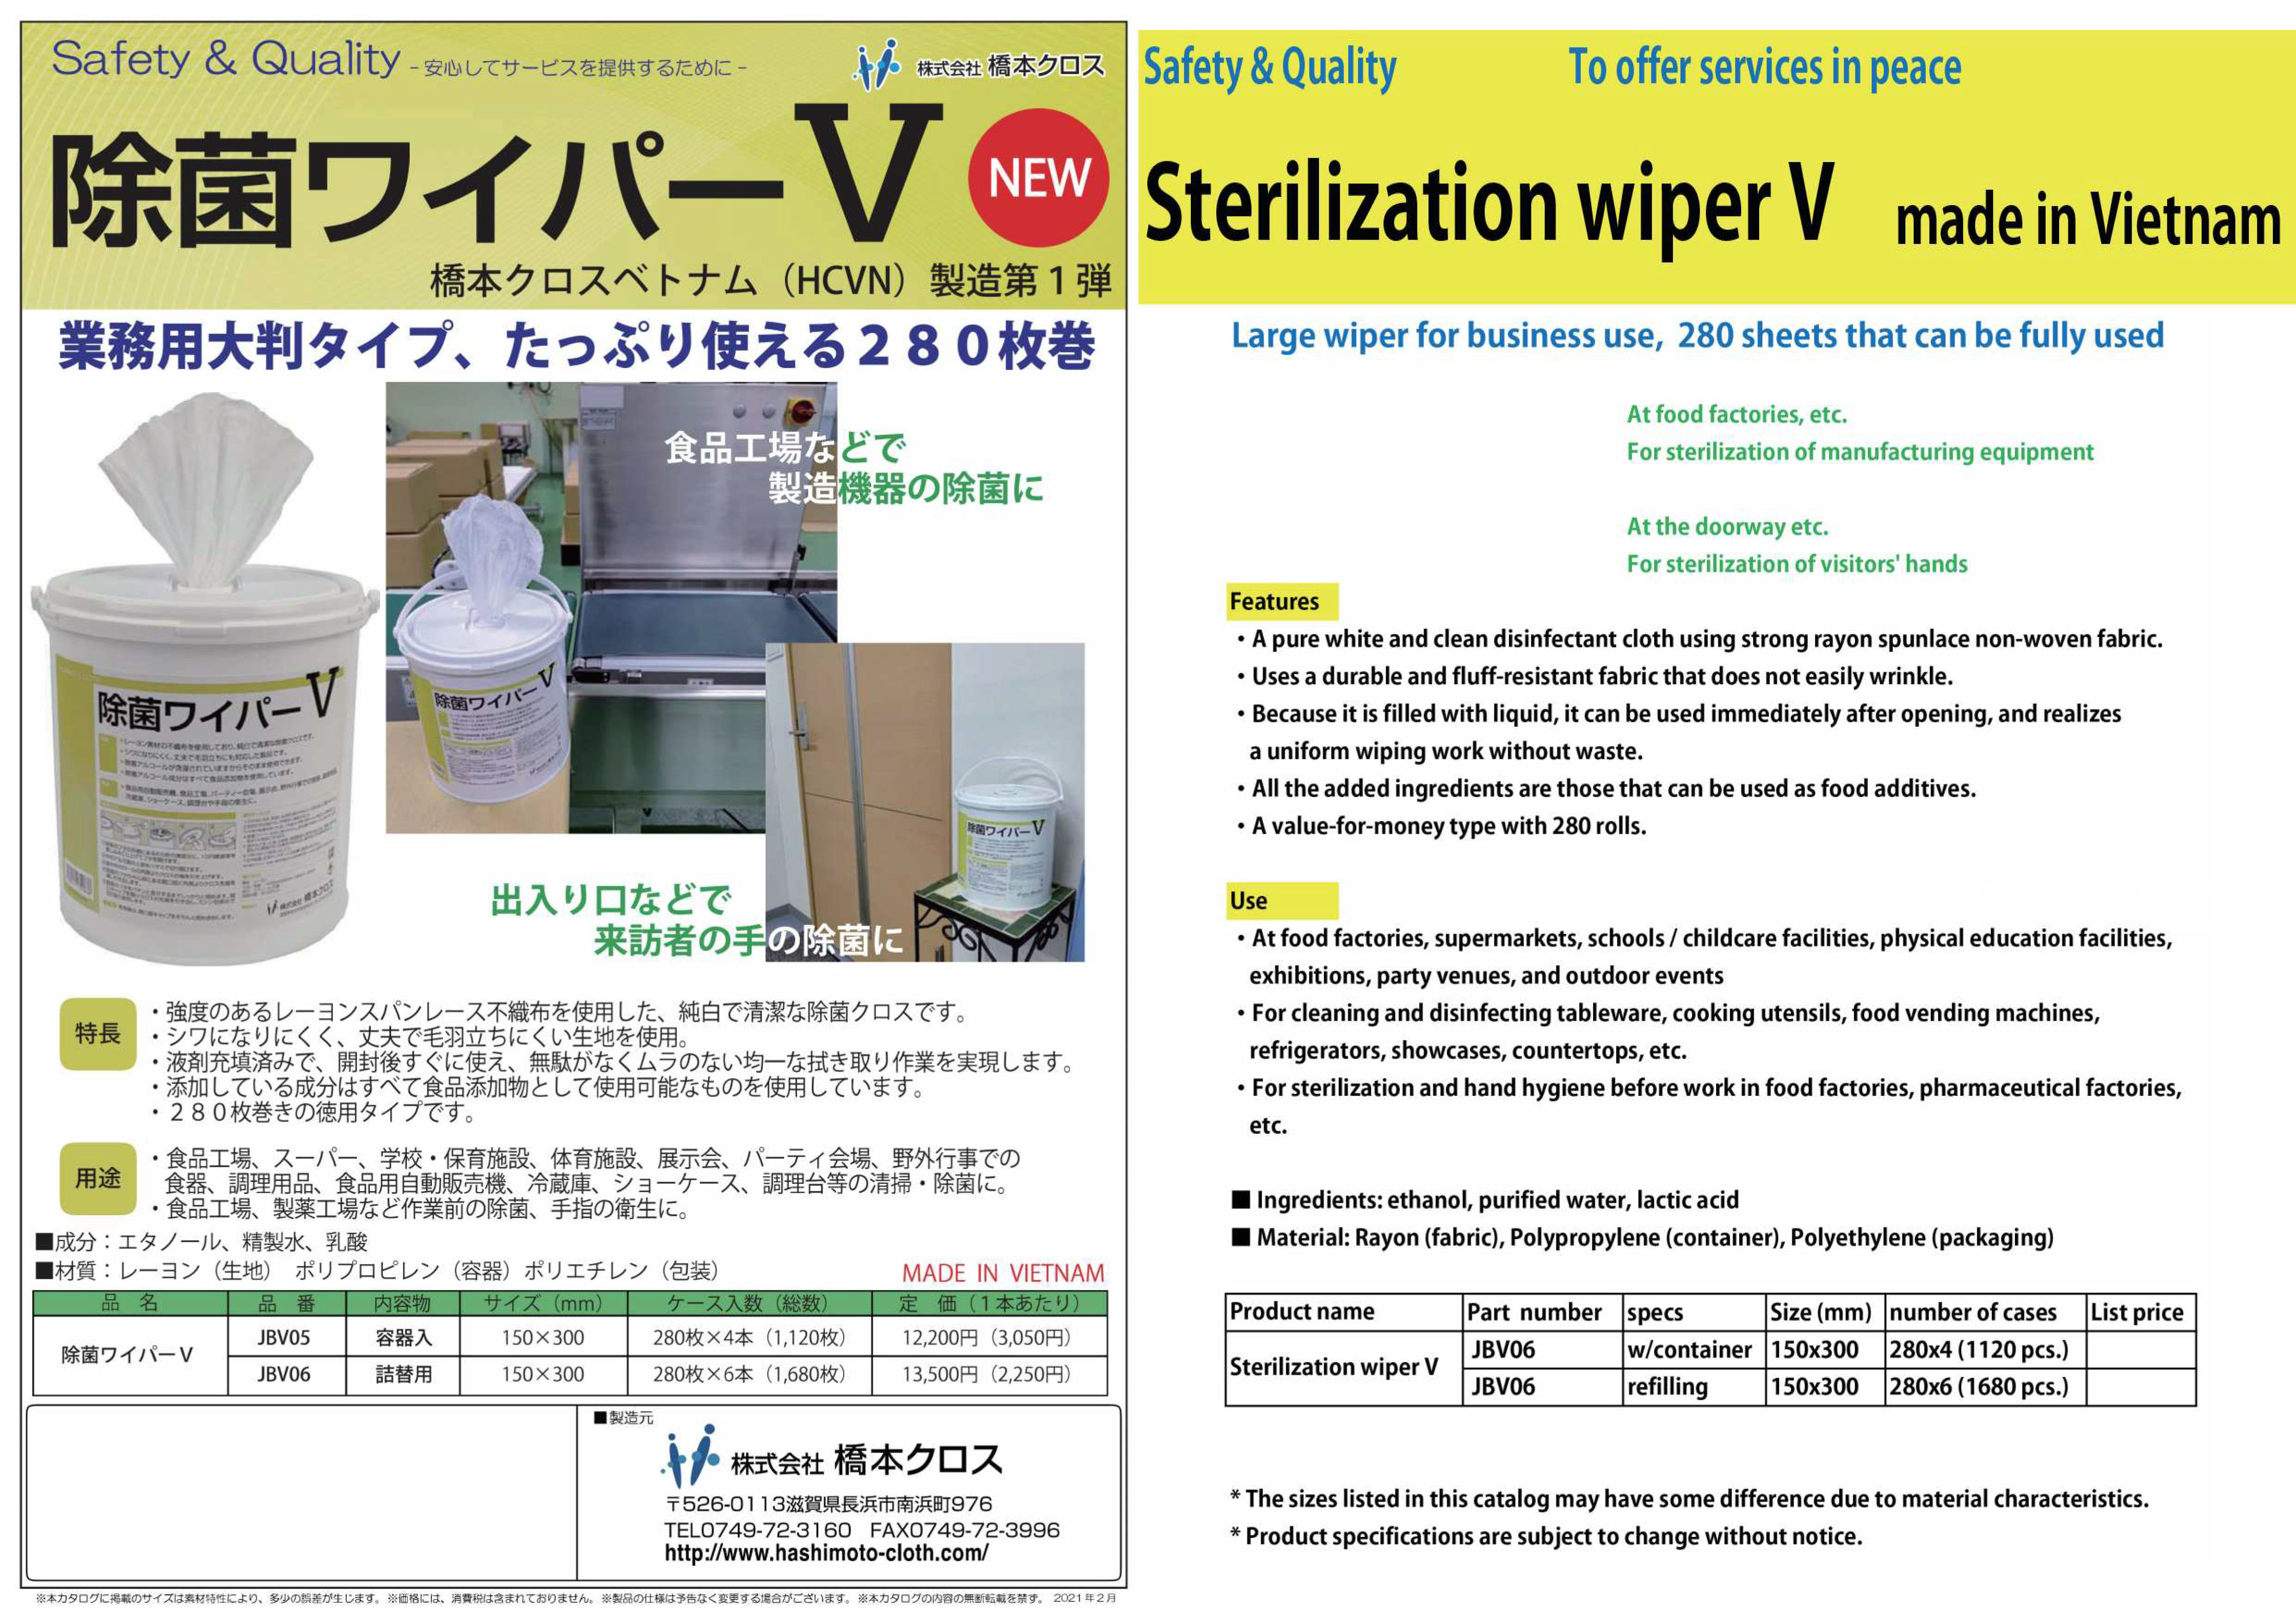 Sterilization wiper V